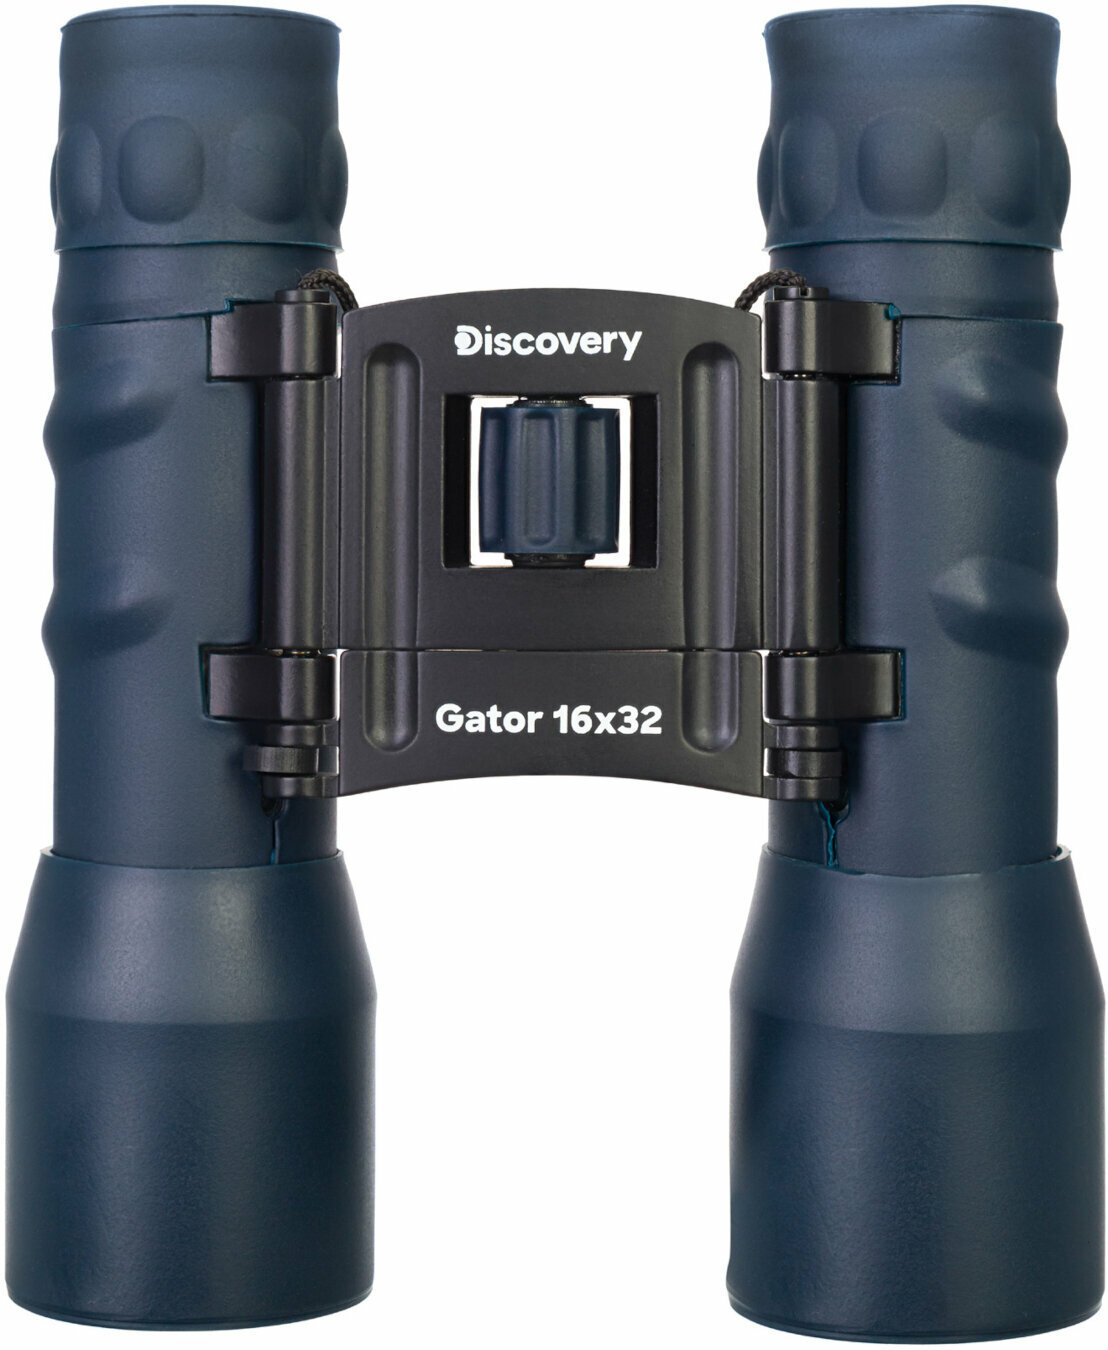 Field binocular Discovery Gator 16x32 Binoculars